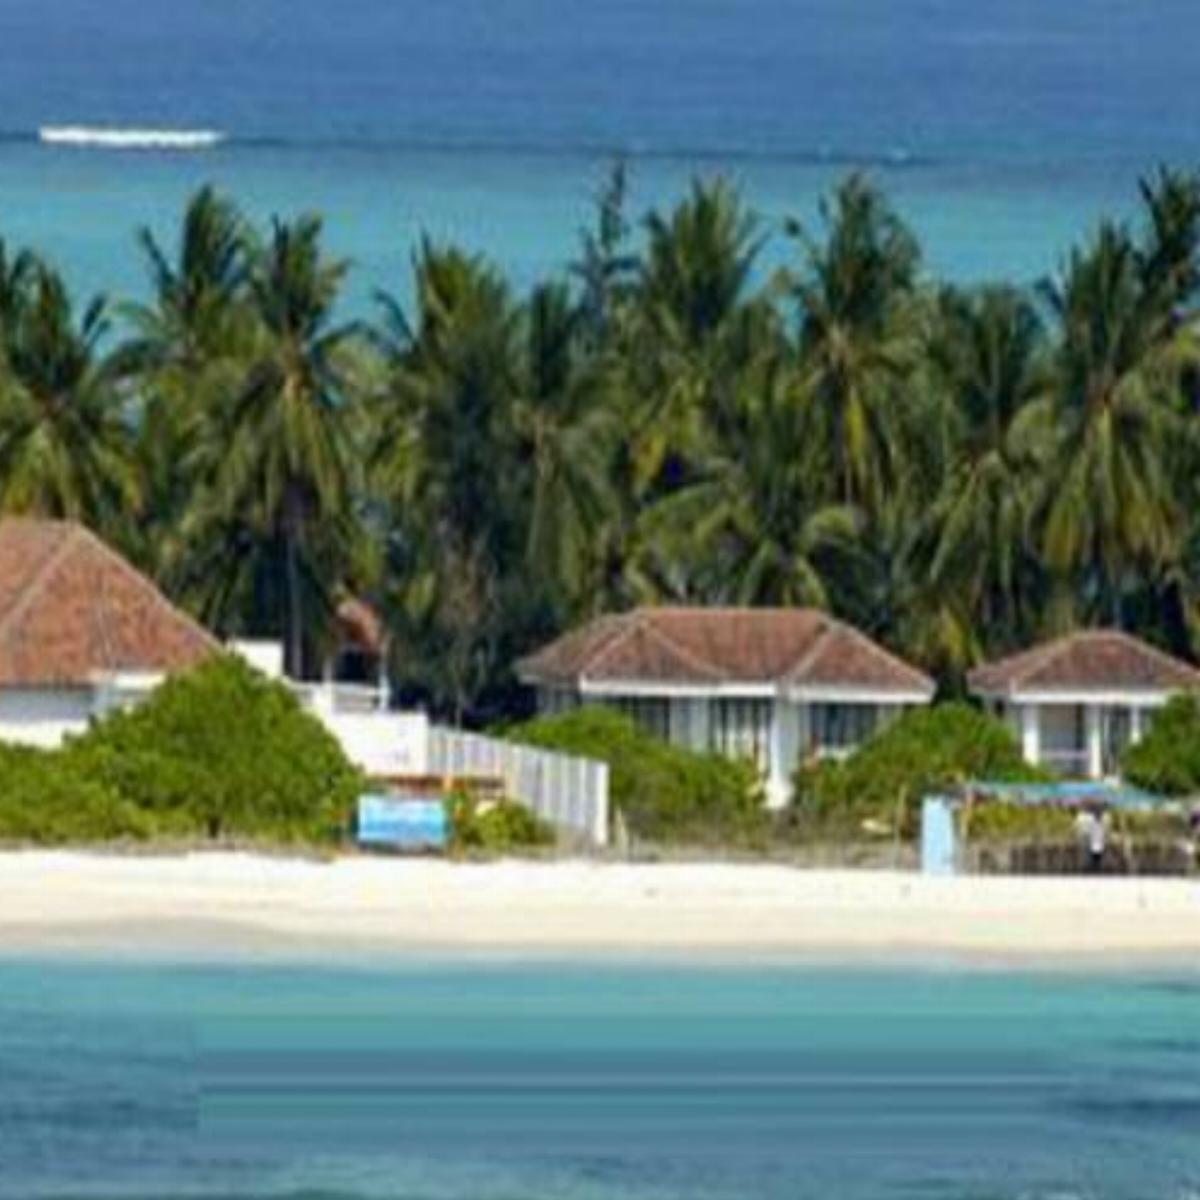 Kadmath Beach Resort Hotel Kadmath Island India